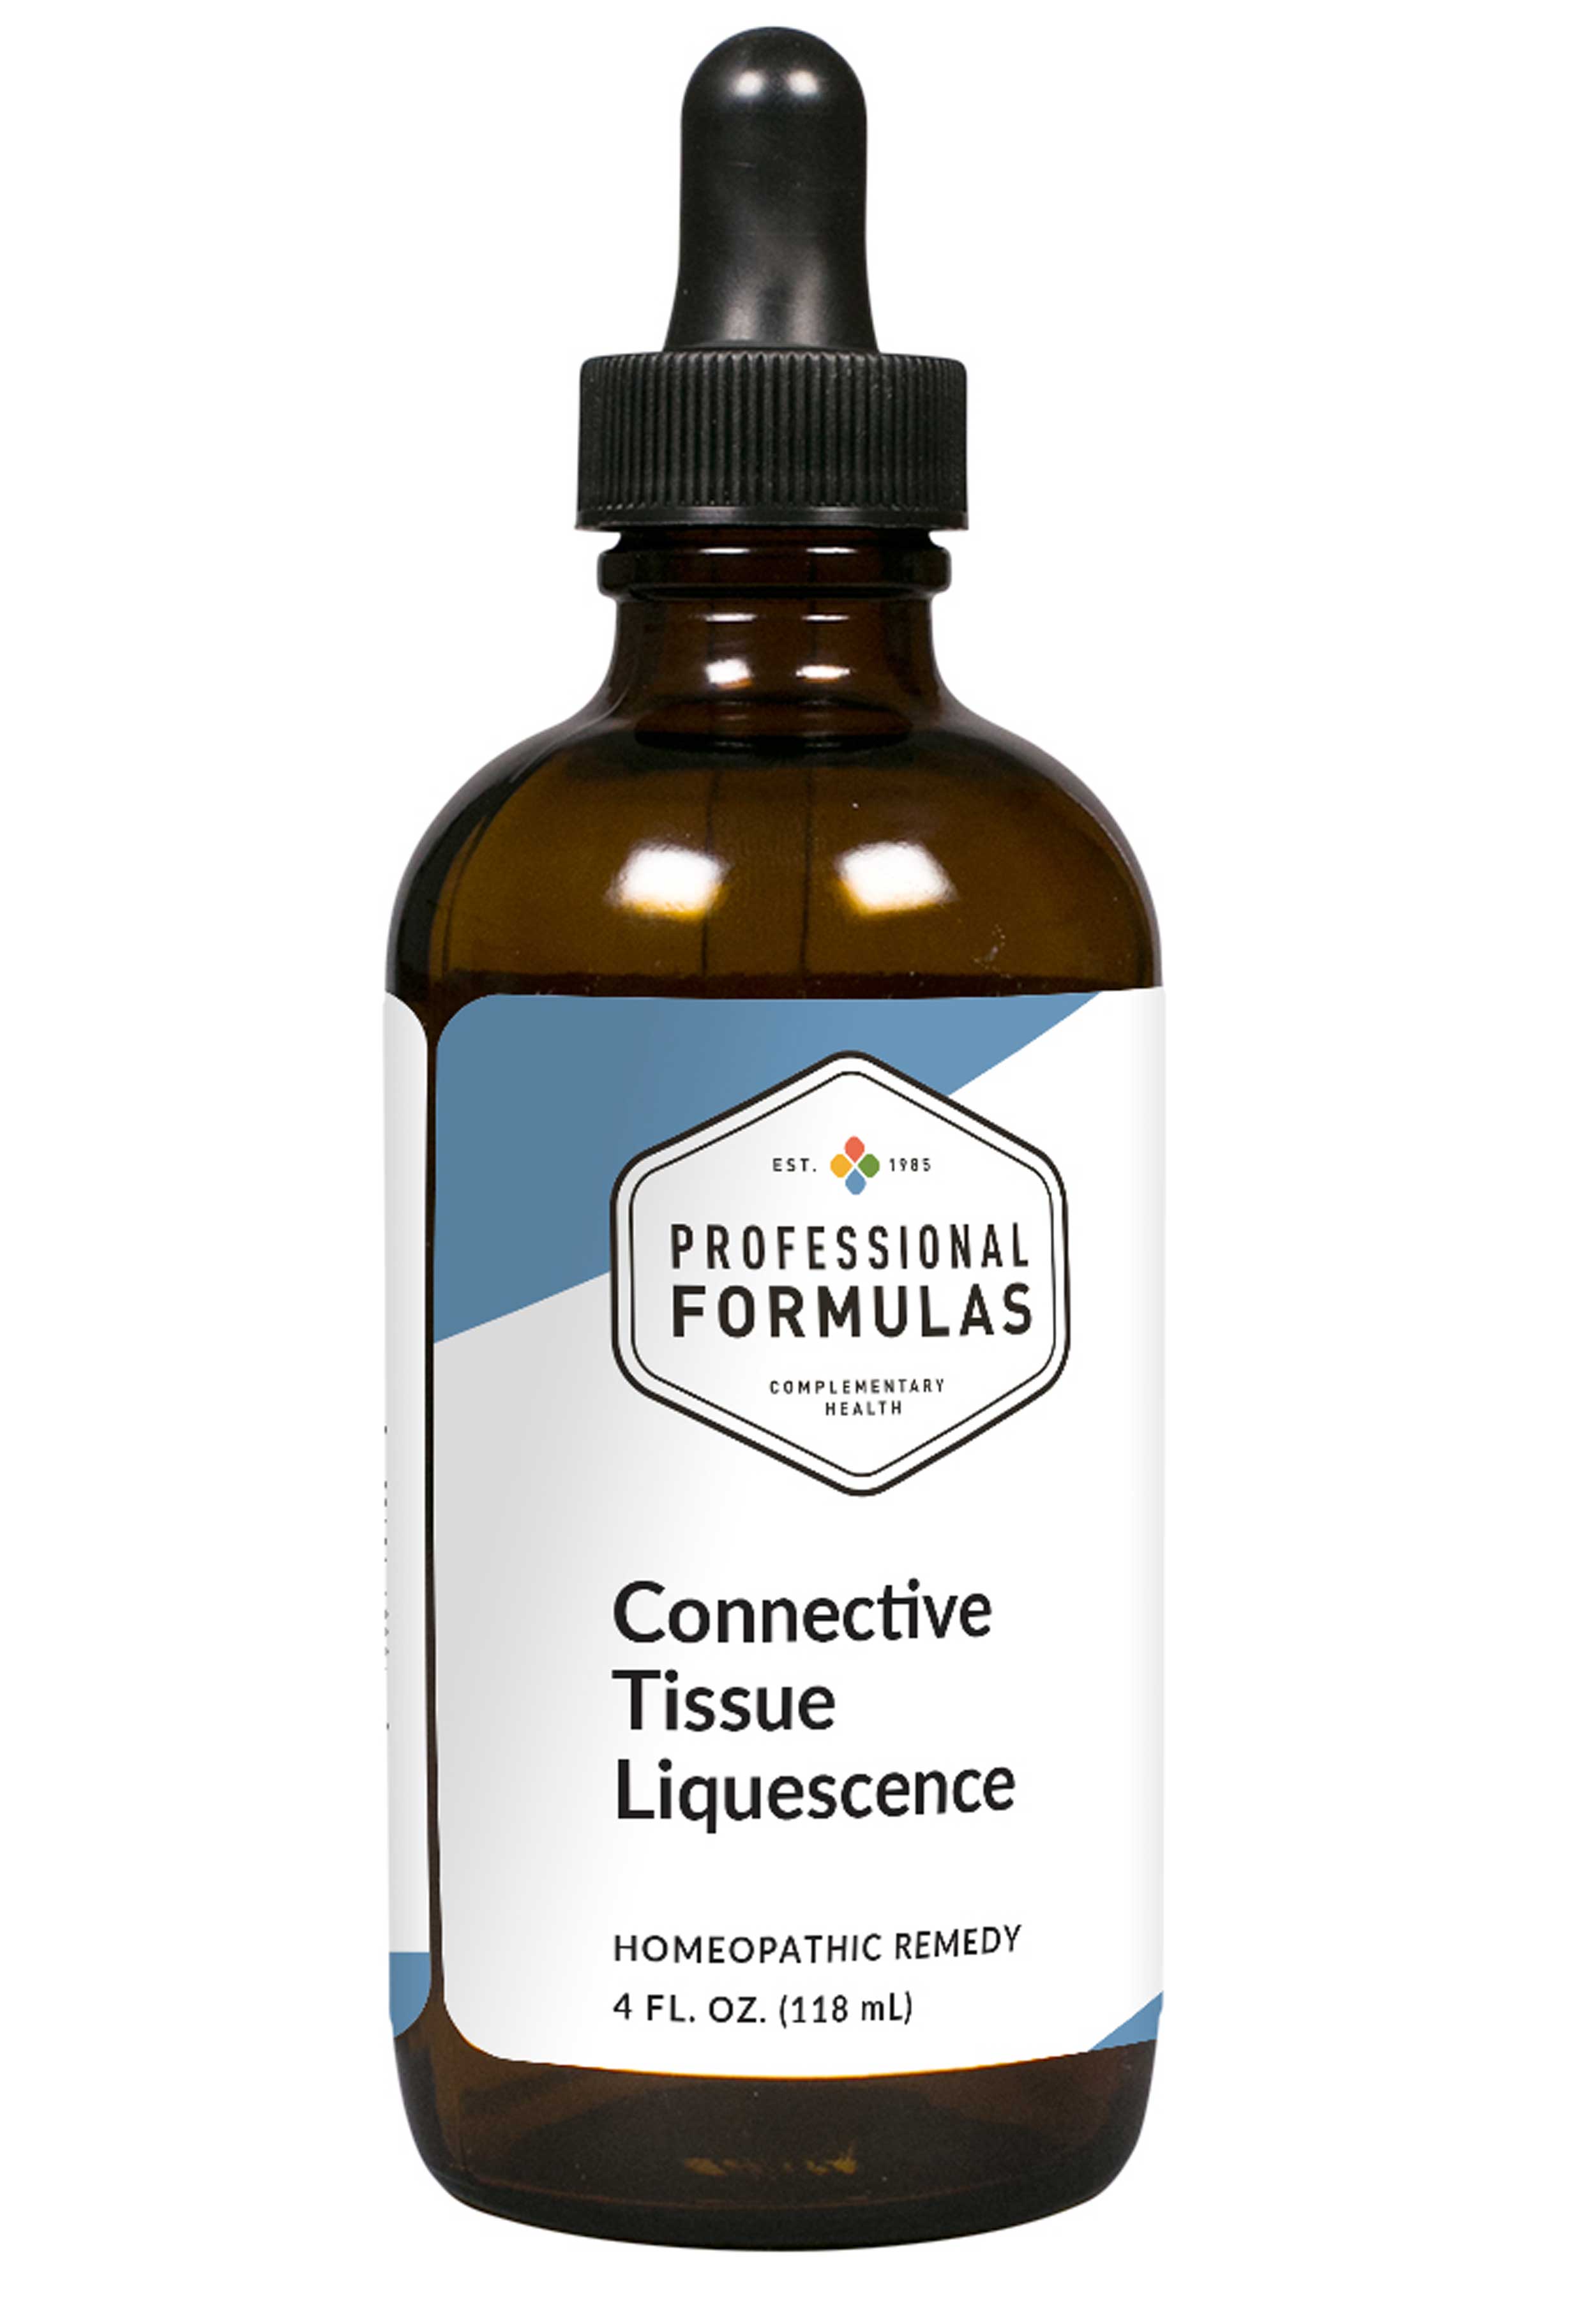 Professional Formulas Connective Tissue Liquescence